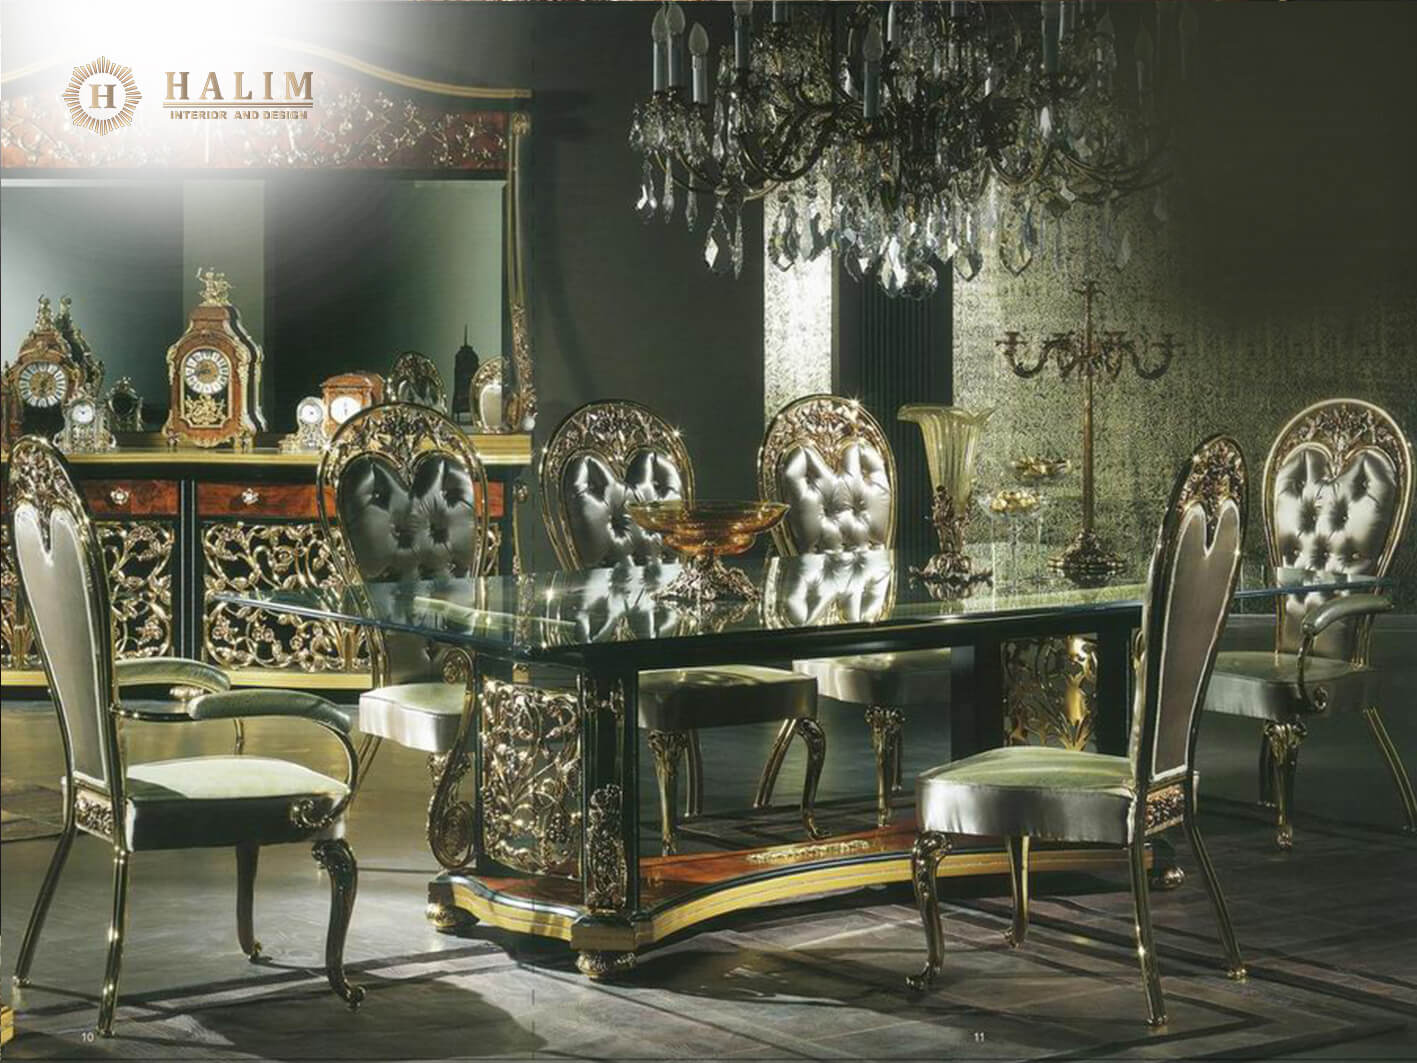 Halim Interior modern furniture contemporer american style minimalist european classic surabaya dining set 70000 06